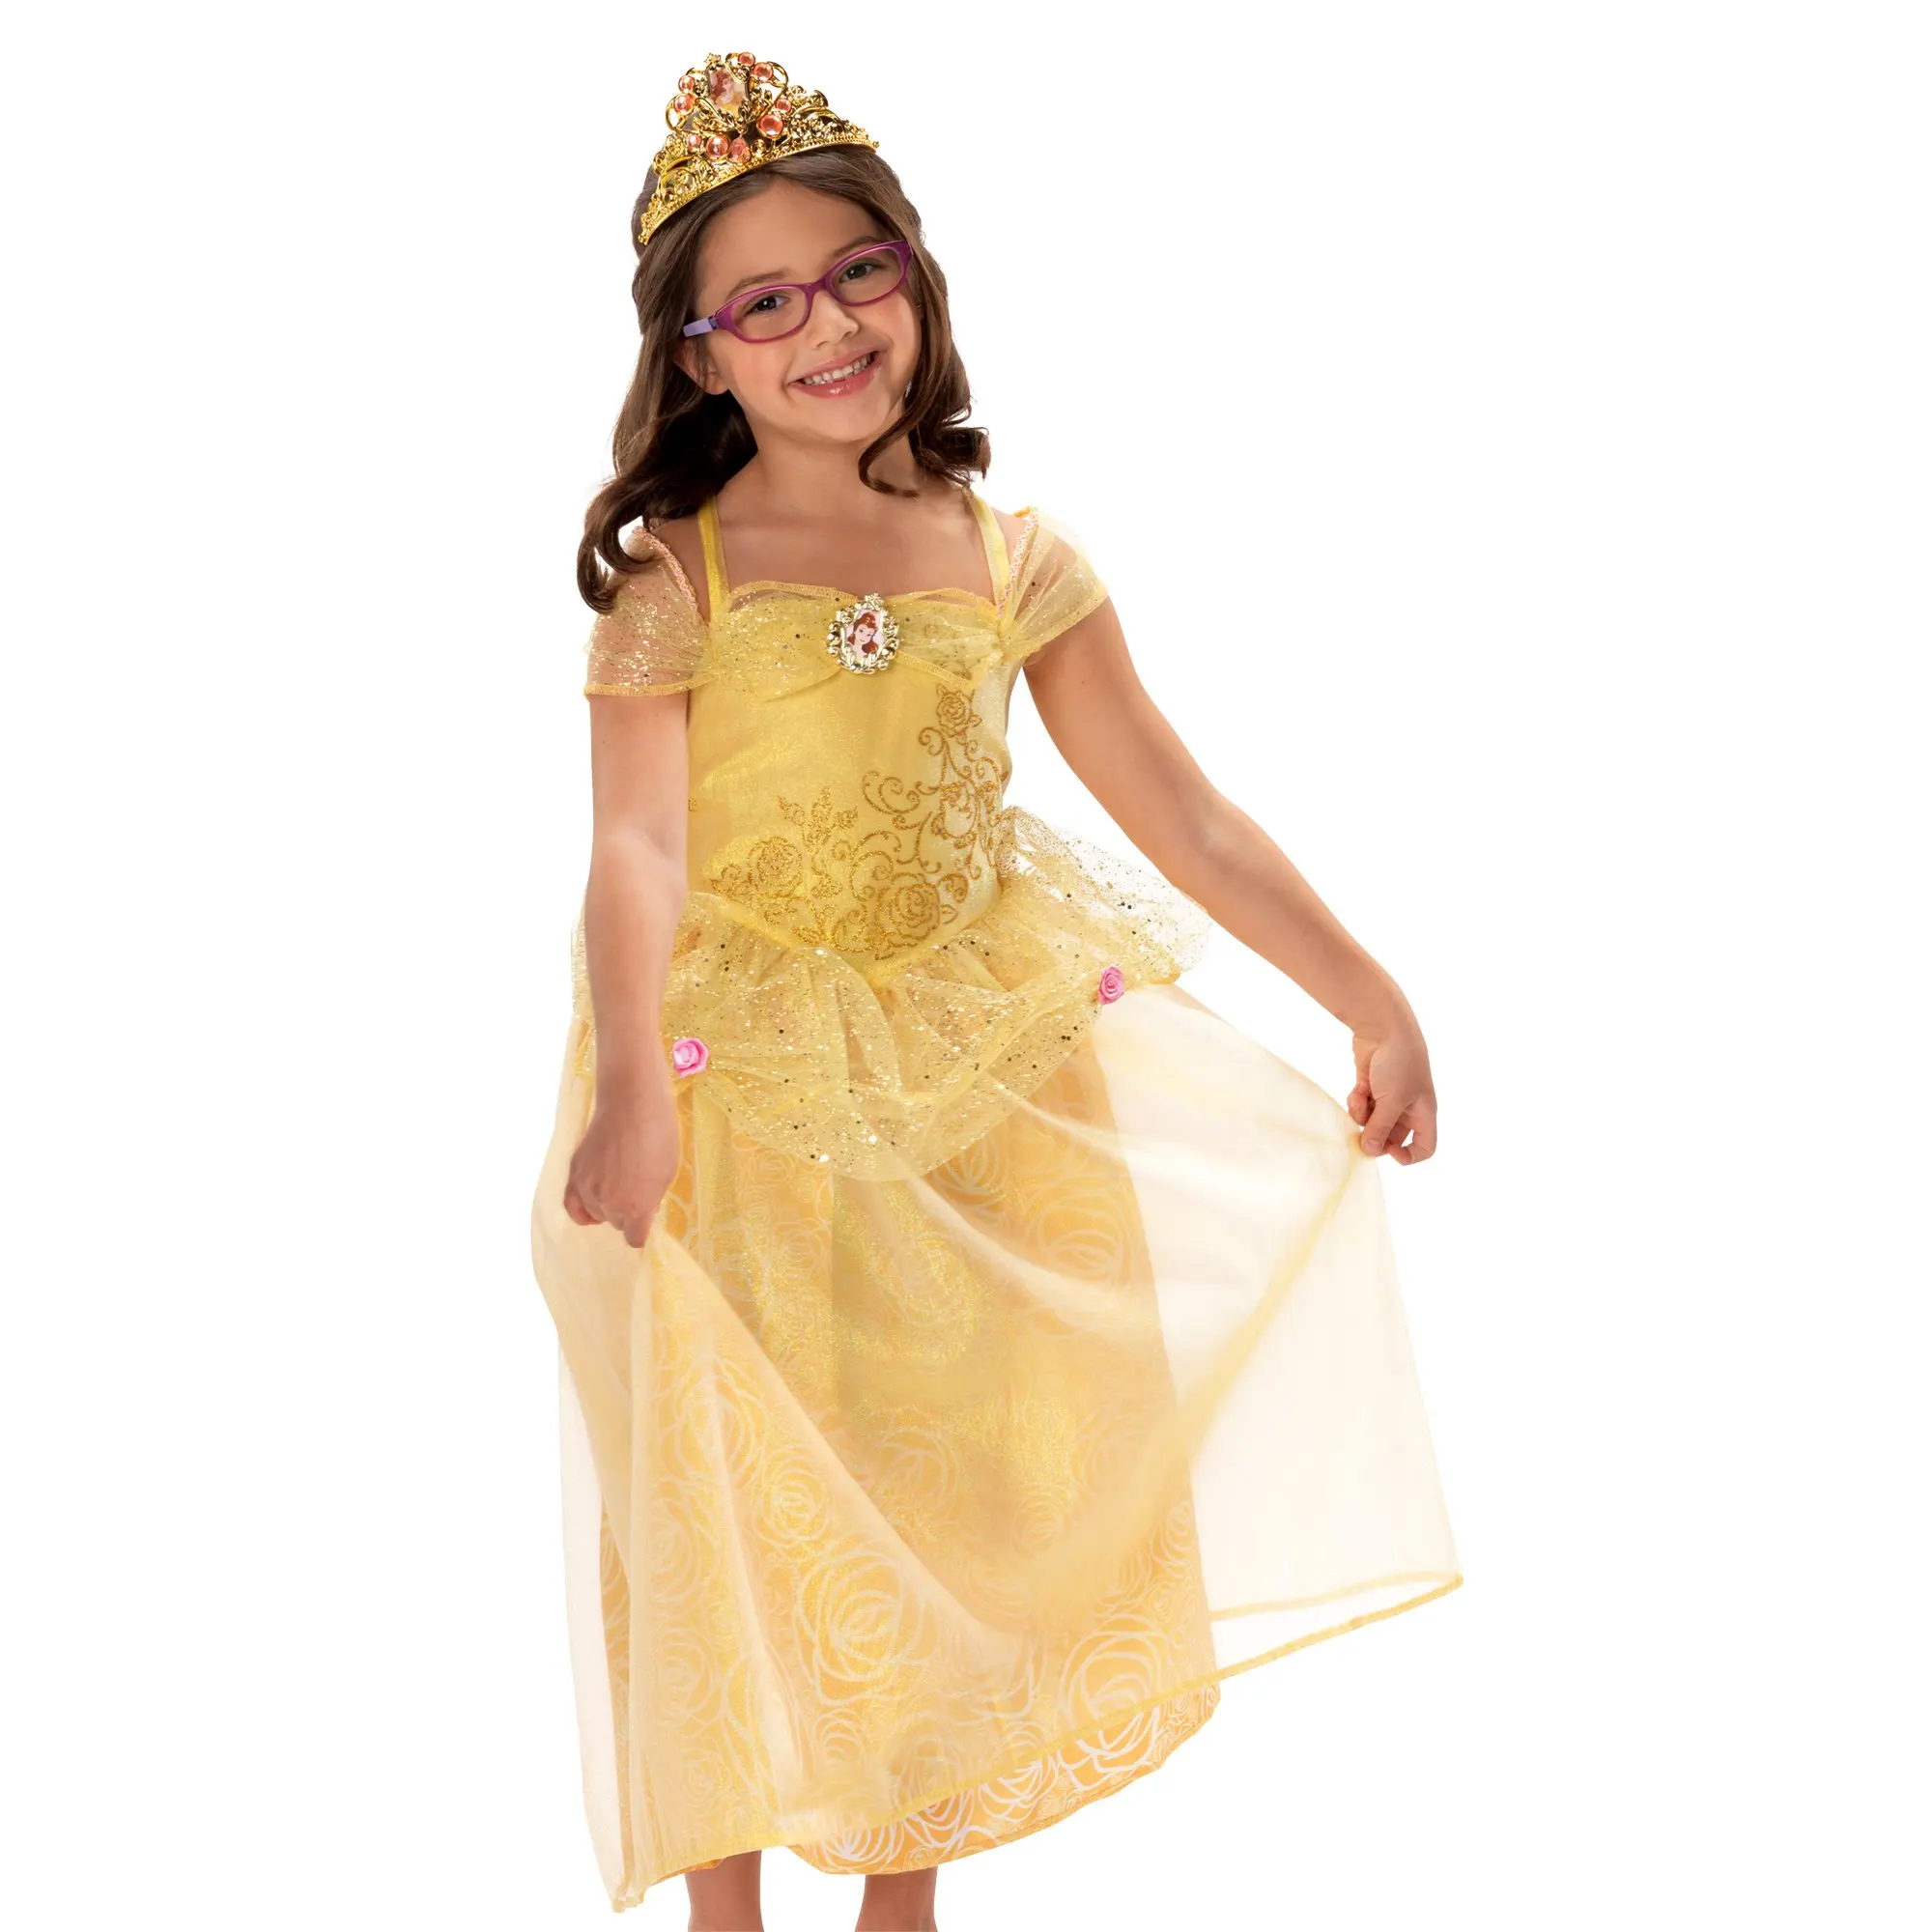 Cheap Belle Disney Princess Dress Find Belle Disney Princess Dress Deals On Line At 